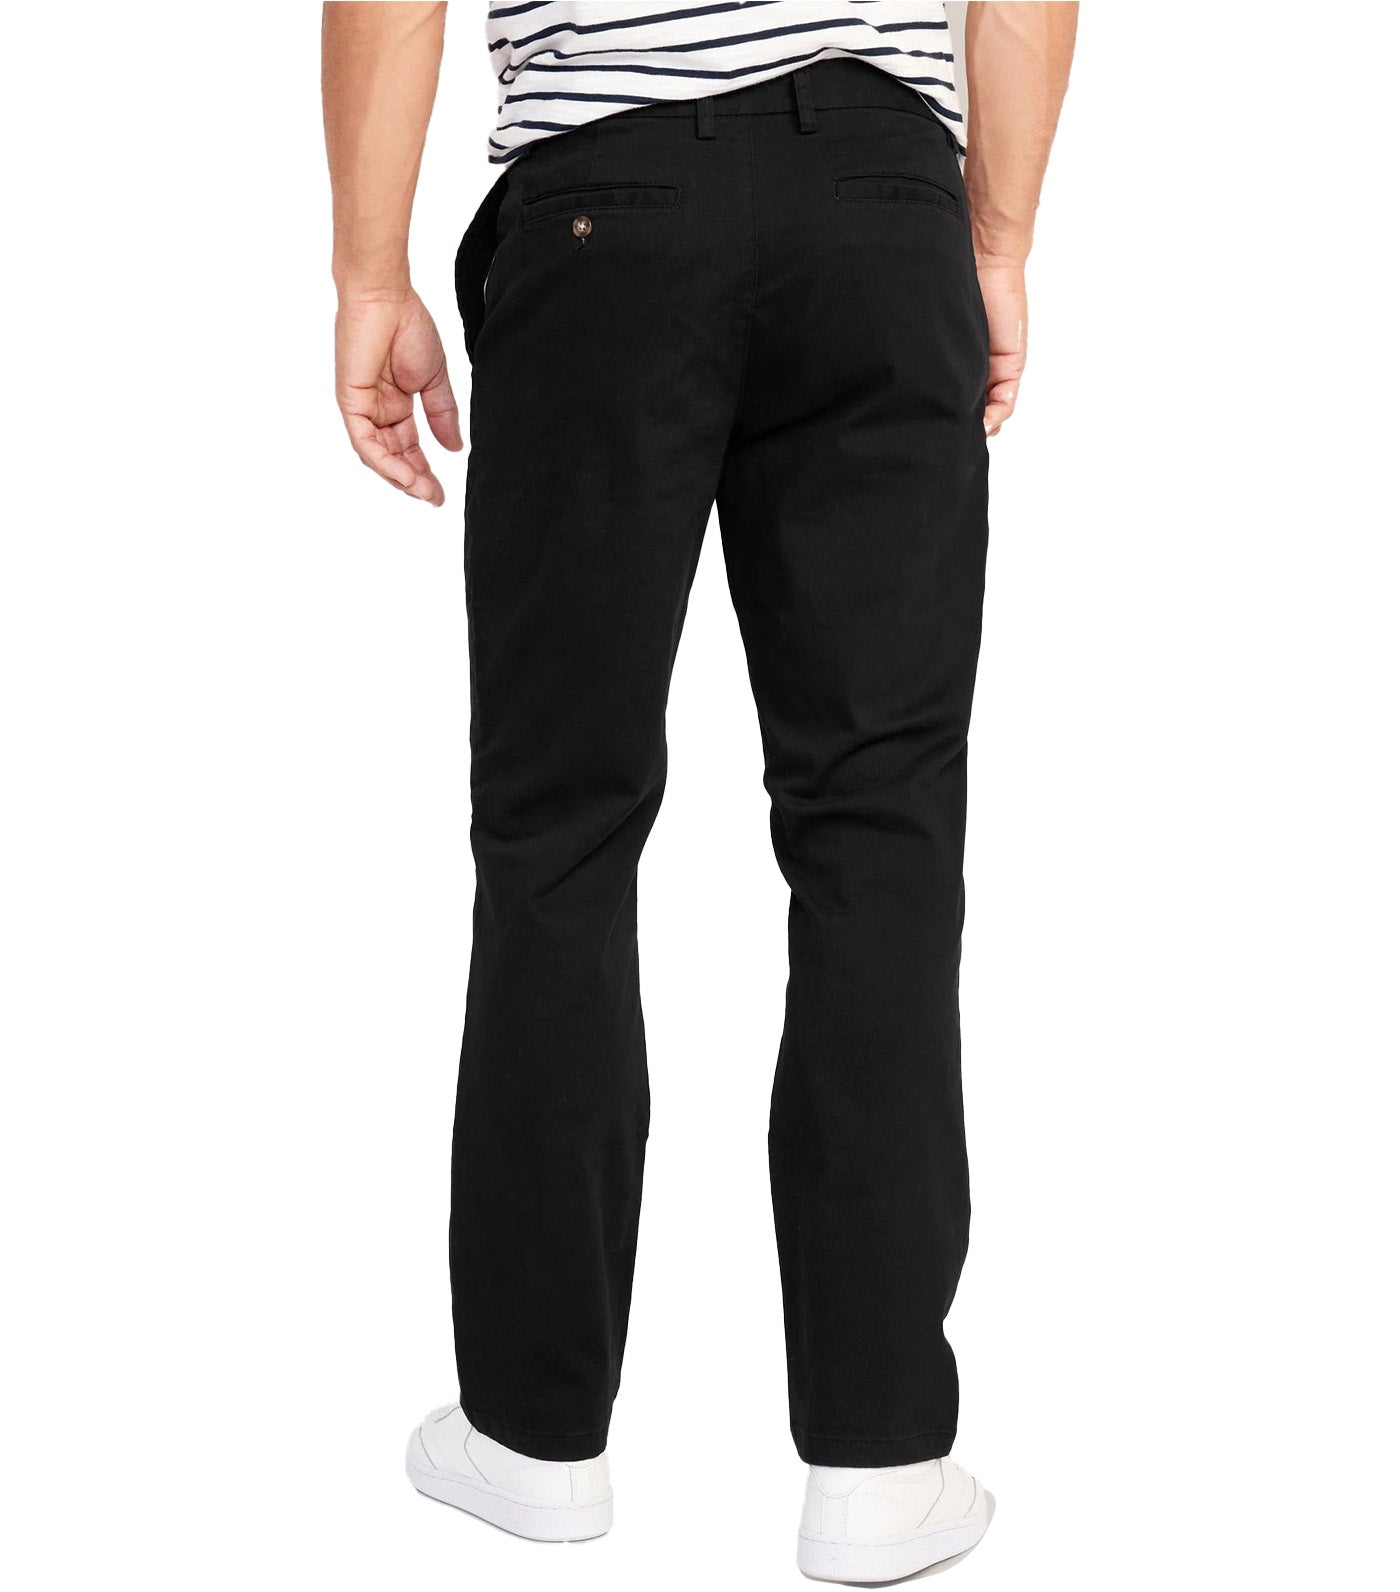 Straight Built-In Flex Rotation Chino Pants for Men Black Jack